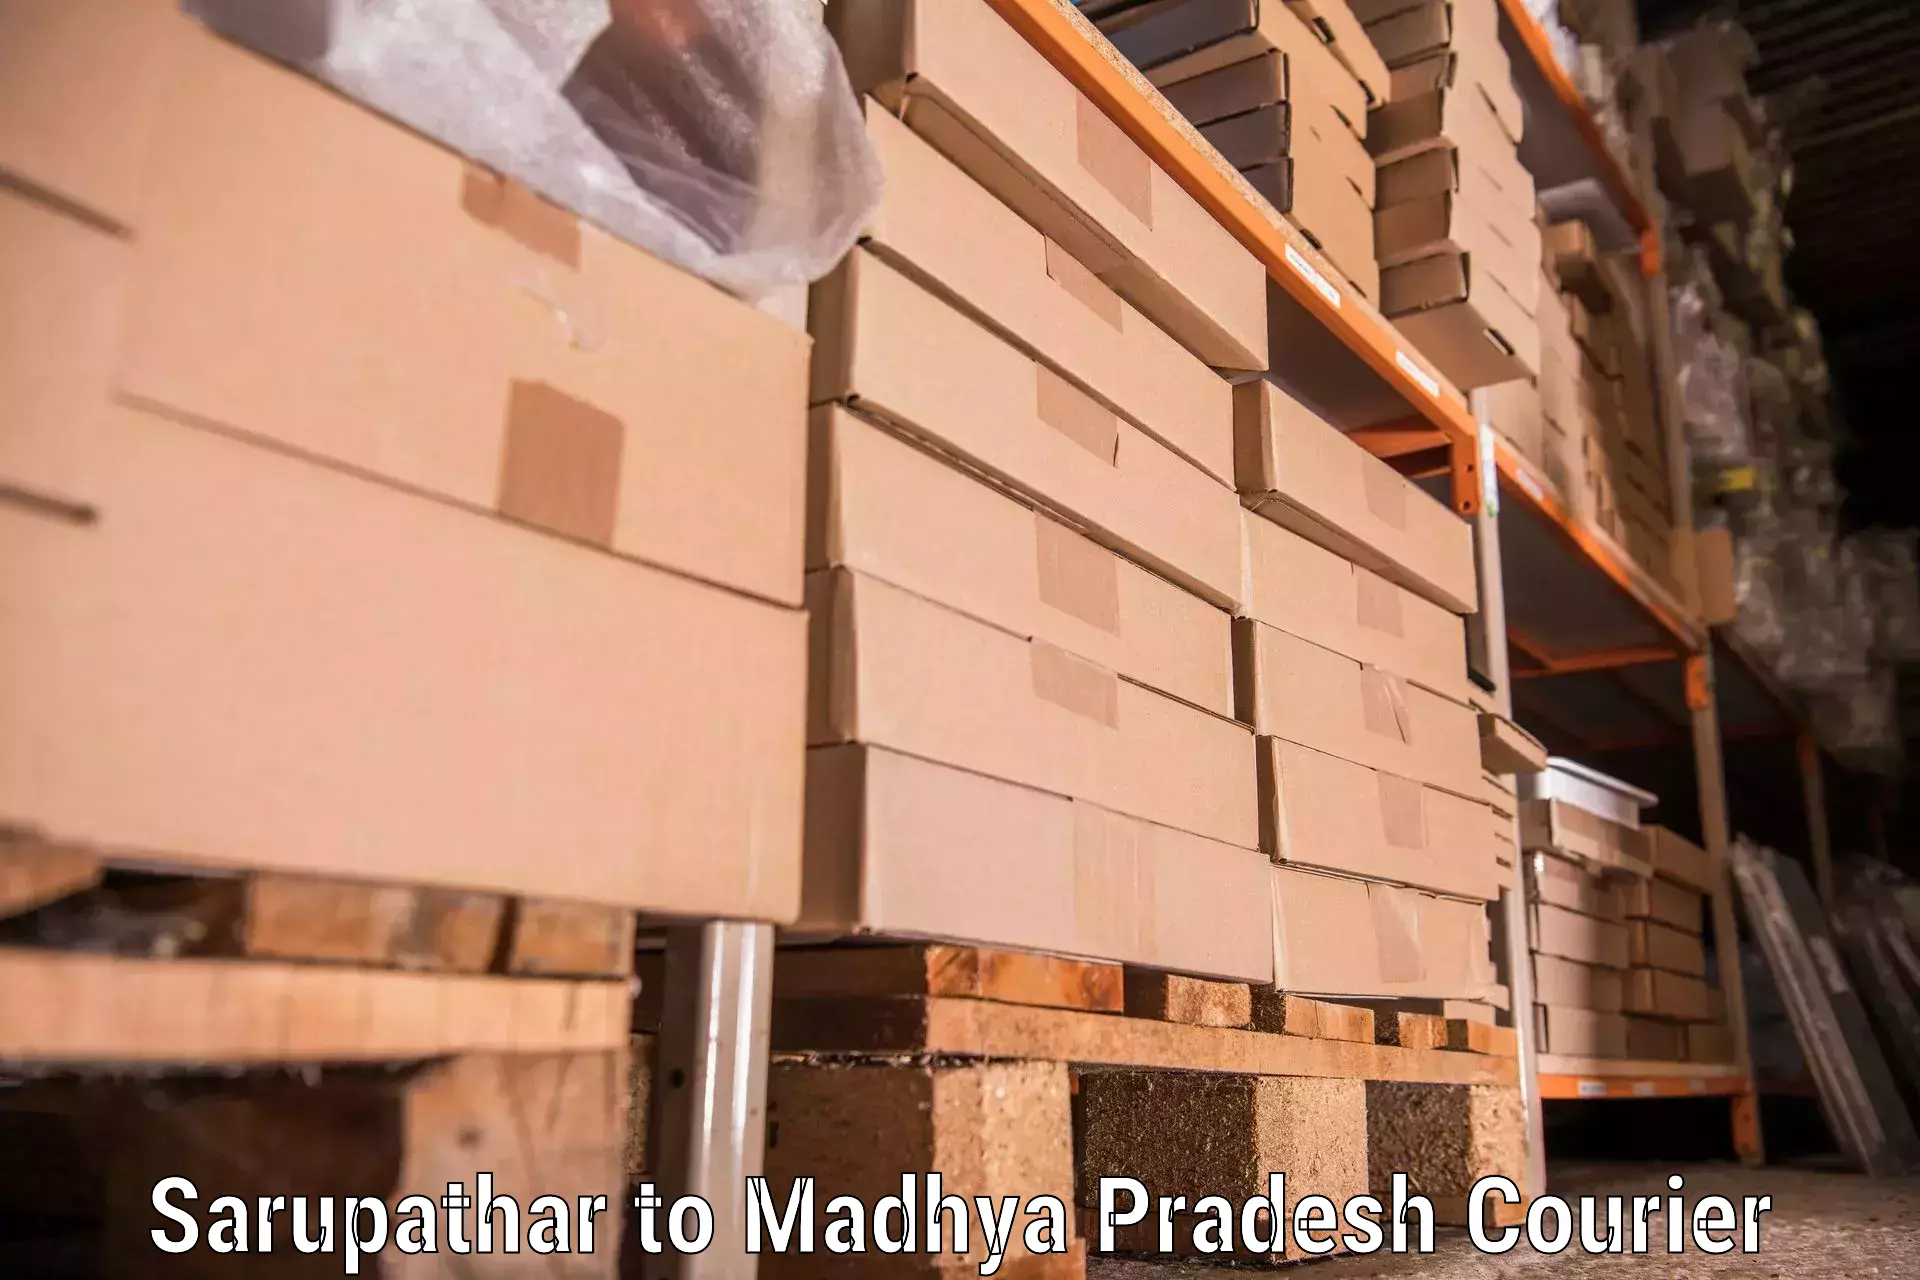 Quality moving company Sarupathar to Ashoknagar